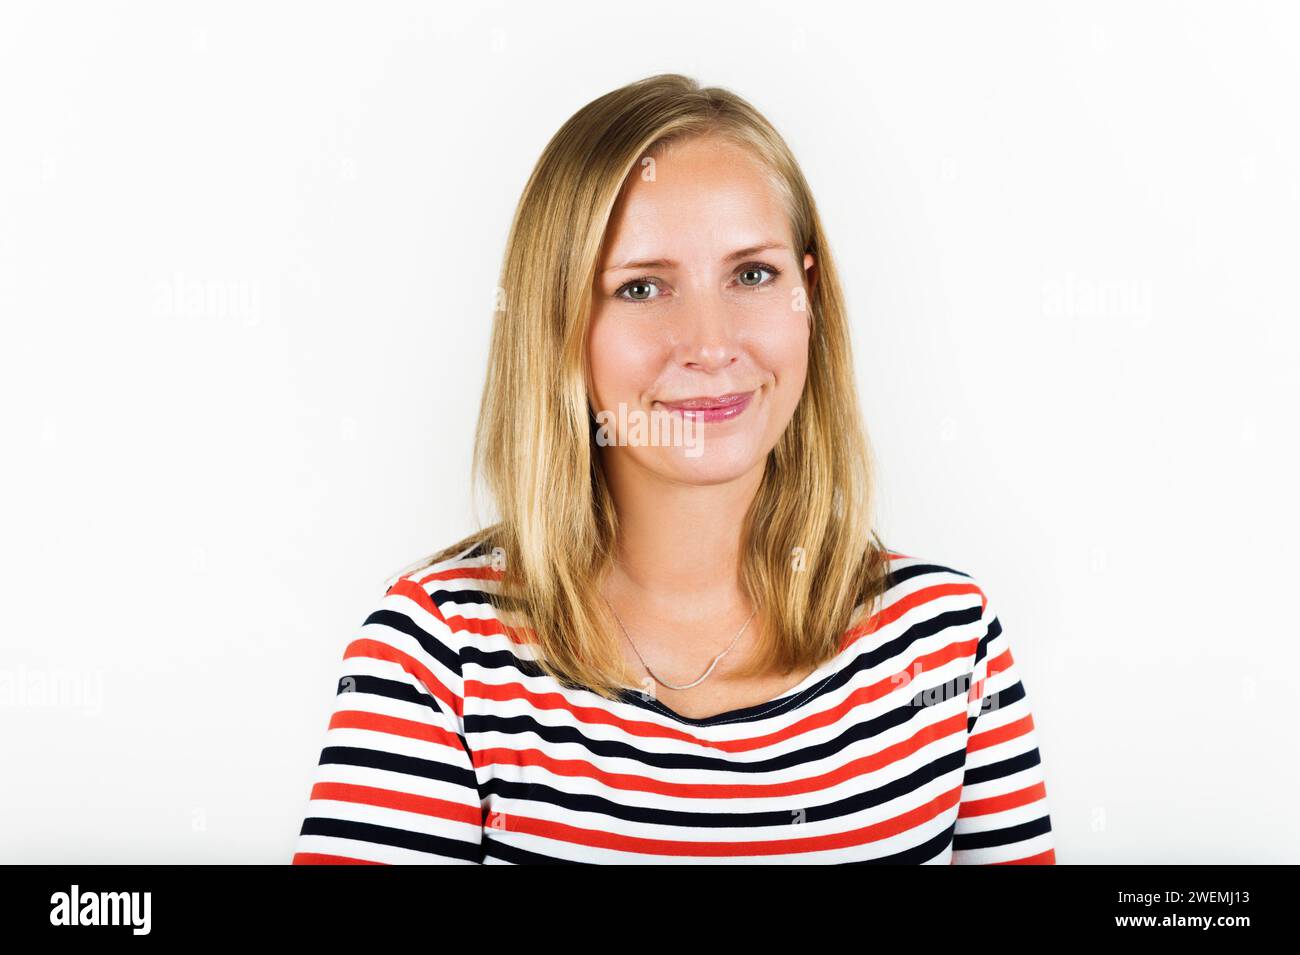 Studio shot of young blond woman wearing stripes t-shirt Stock Photo